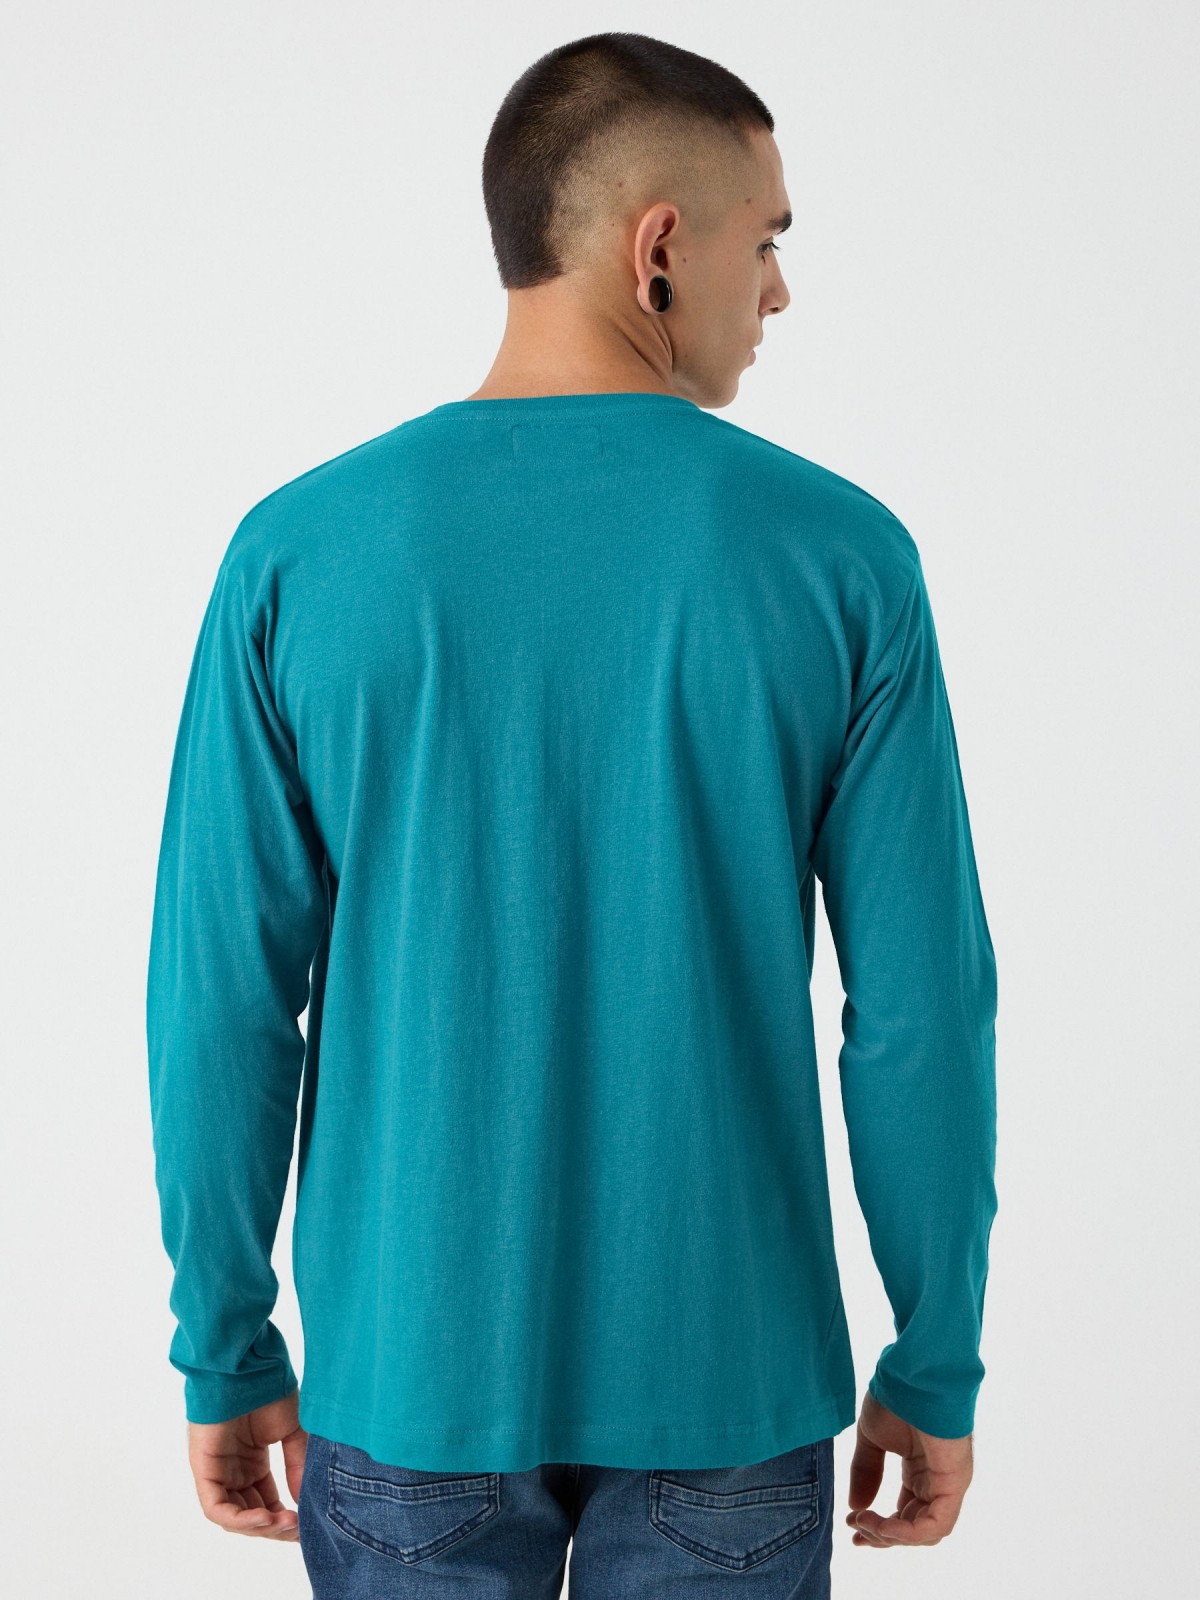 Camiseta estampado Inside verde mar vista media trasera